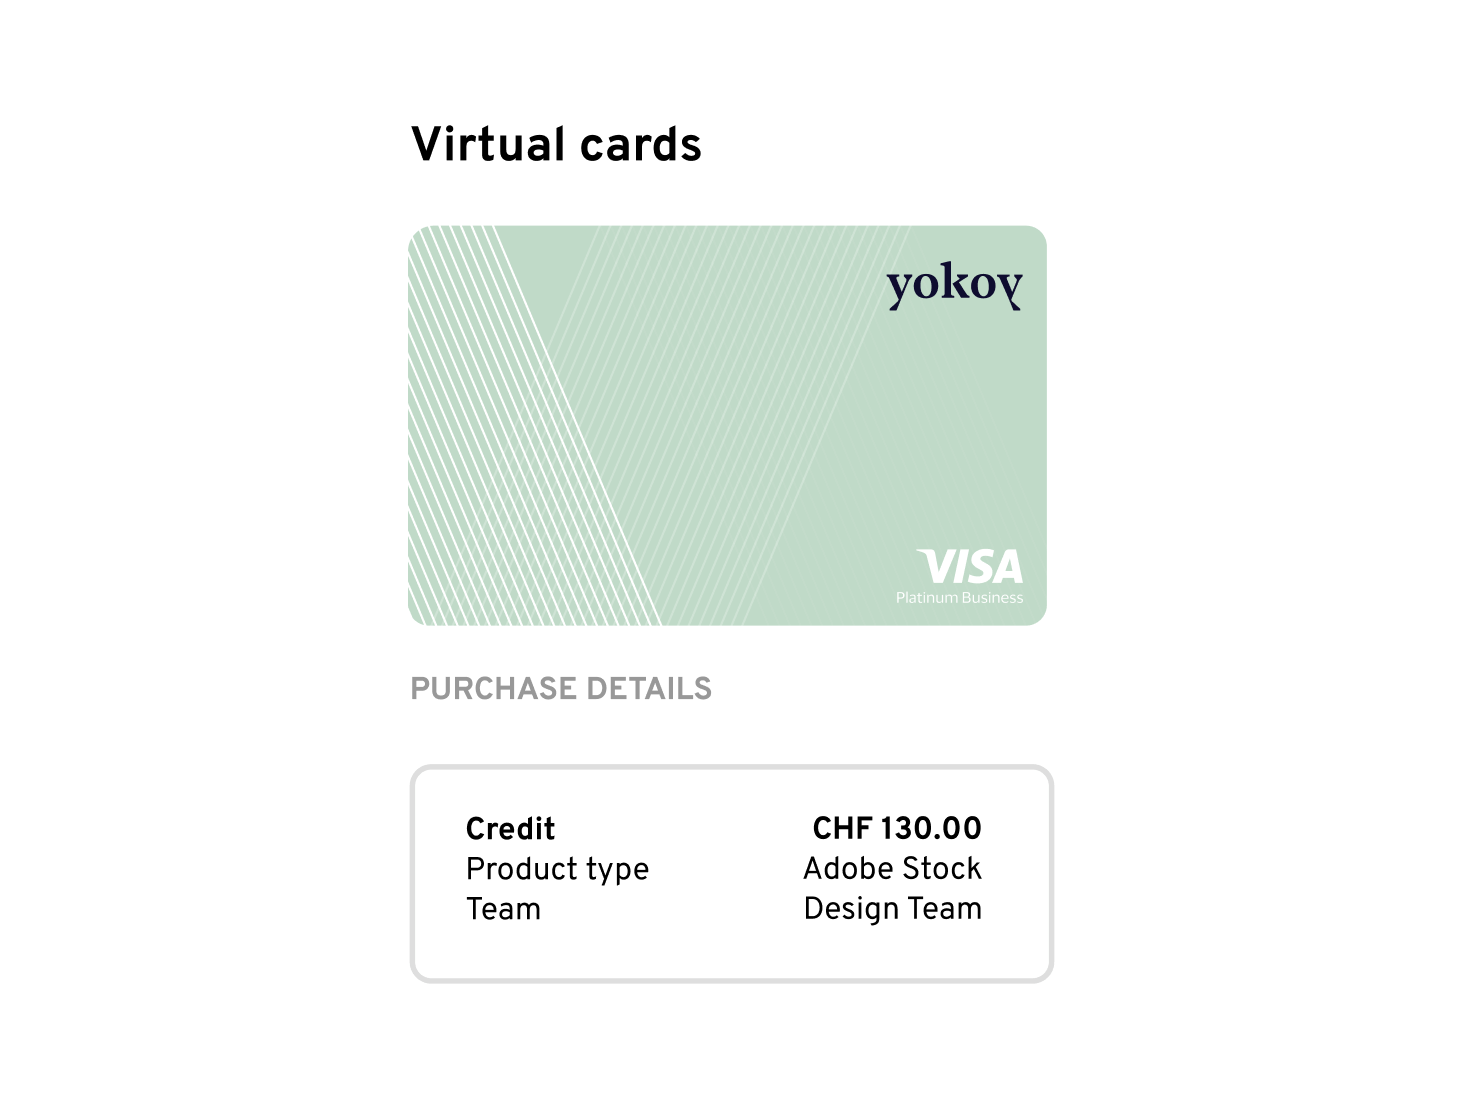 corporate-cards-virtual-visa-card